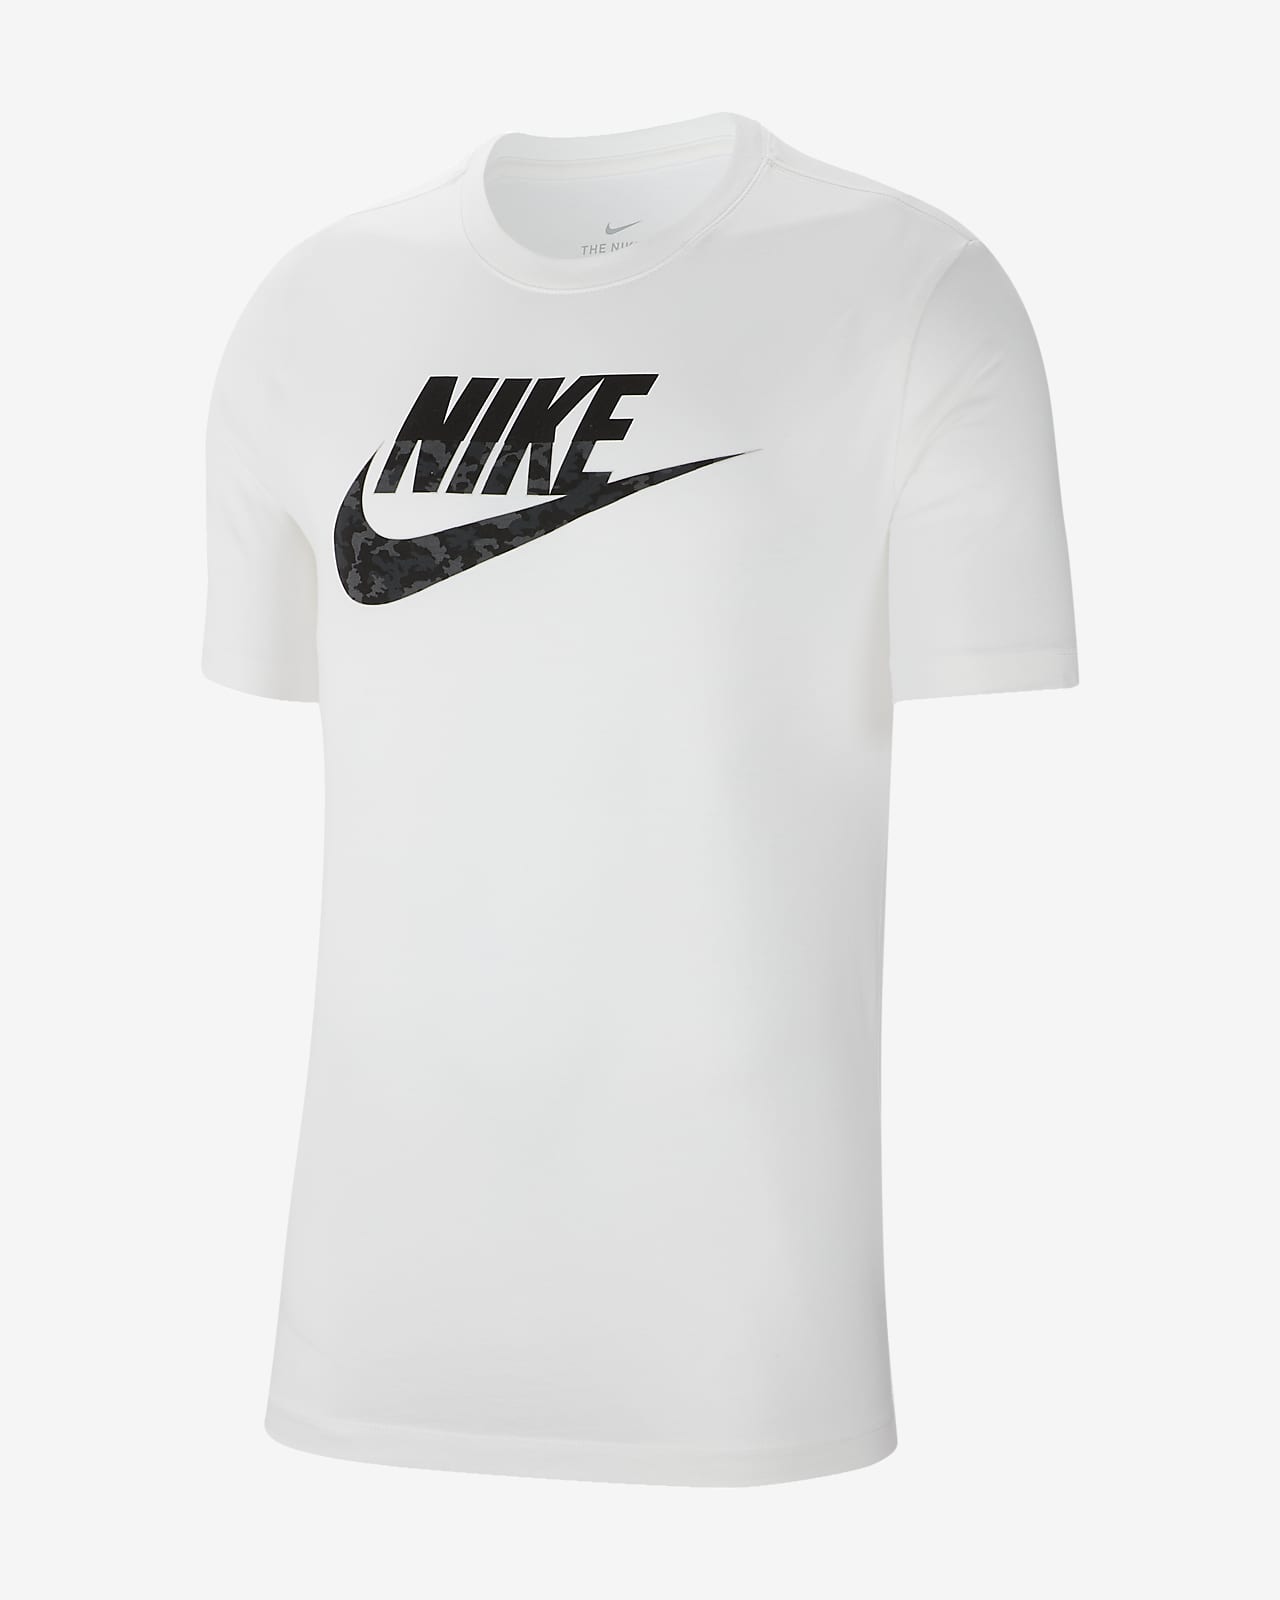 Nike Sportswear Herren-Camo-T-Shirt